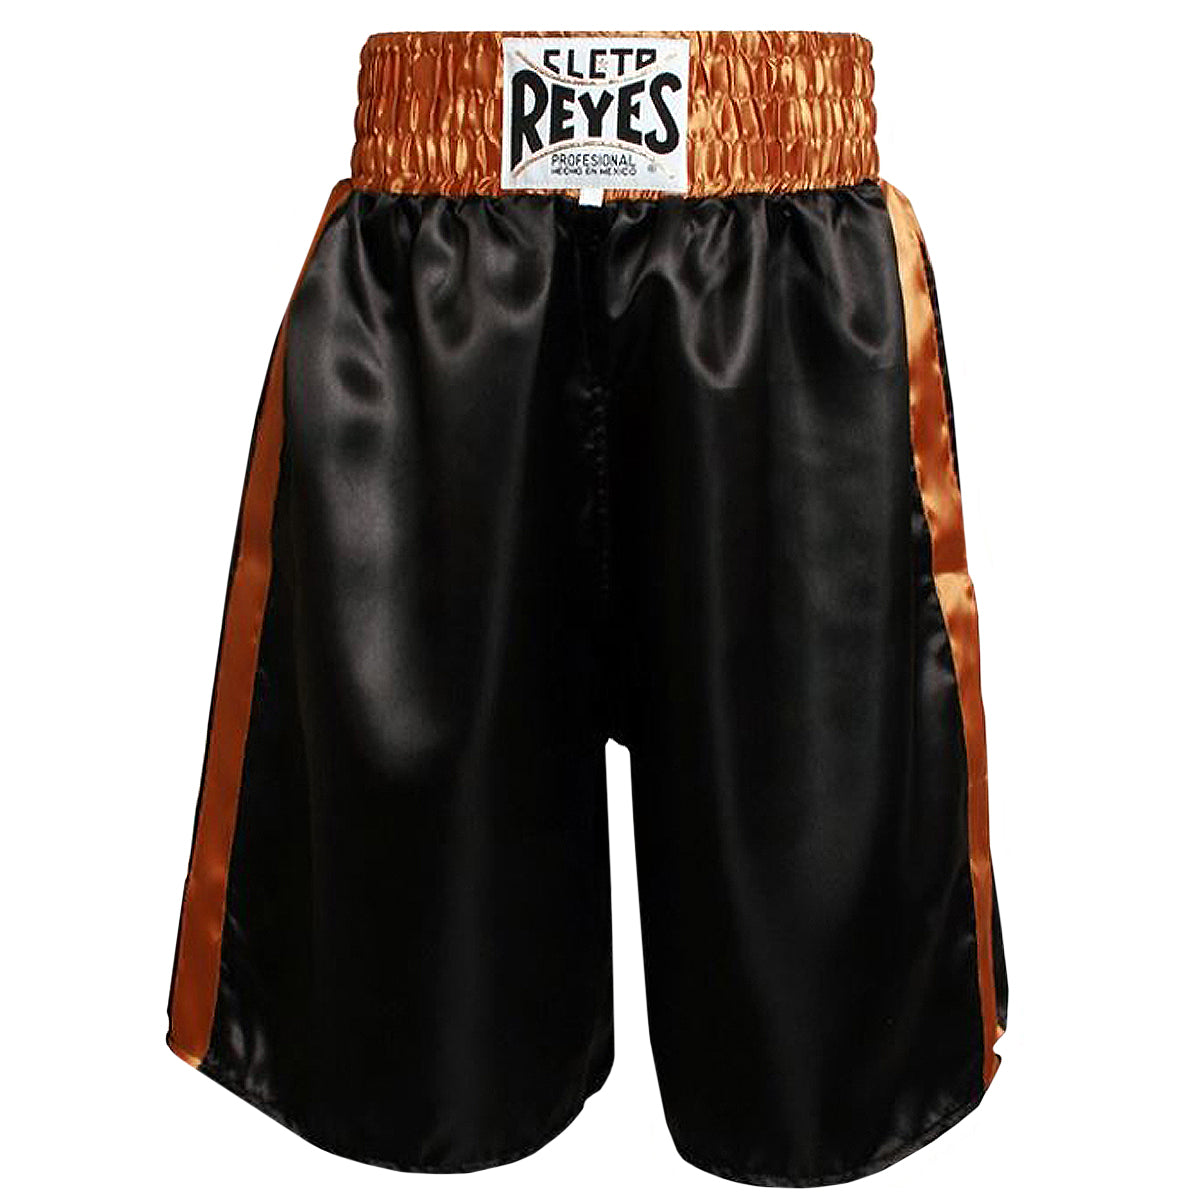 Cleto Reyes Satin Classic Boxing Trunks - Black/Gold Cleto Reyes